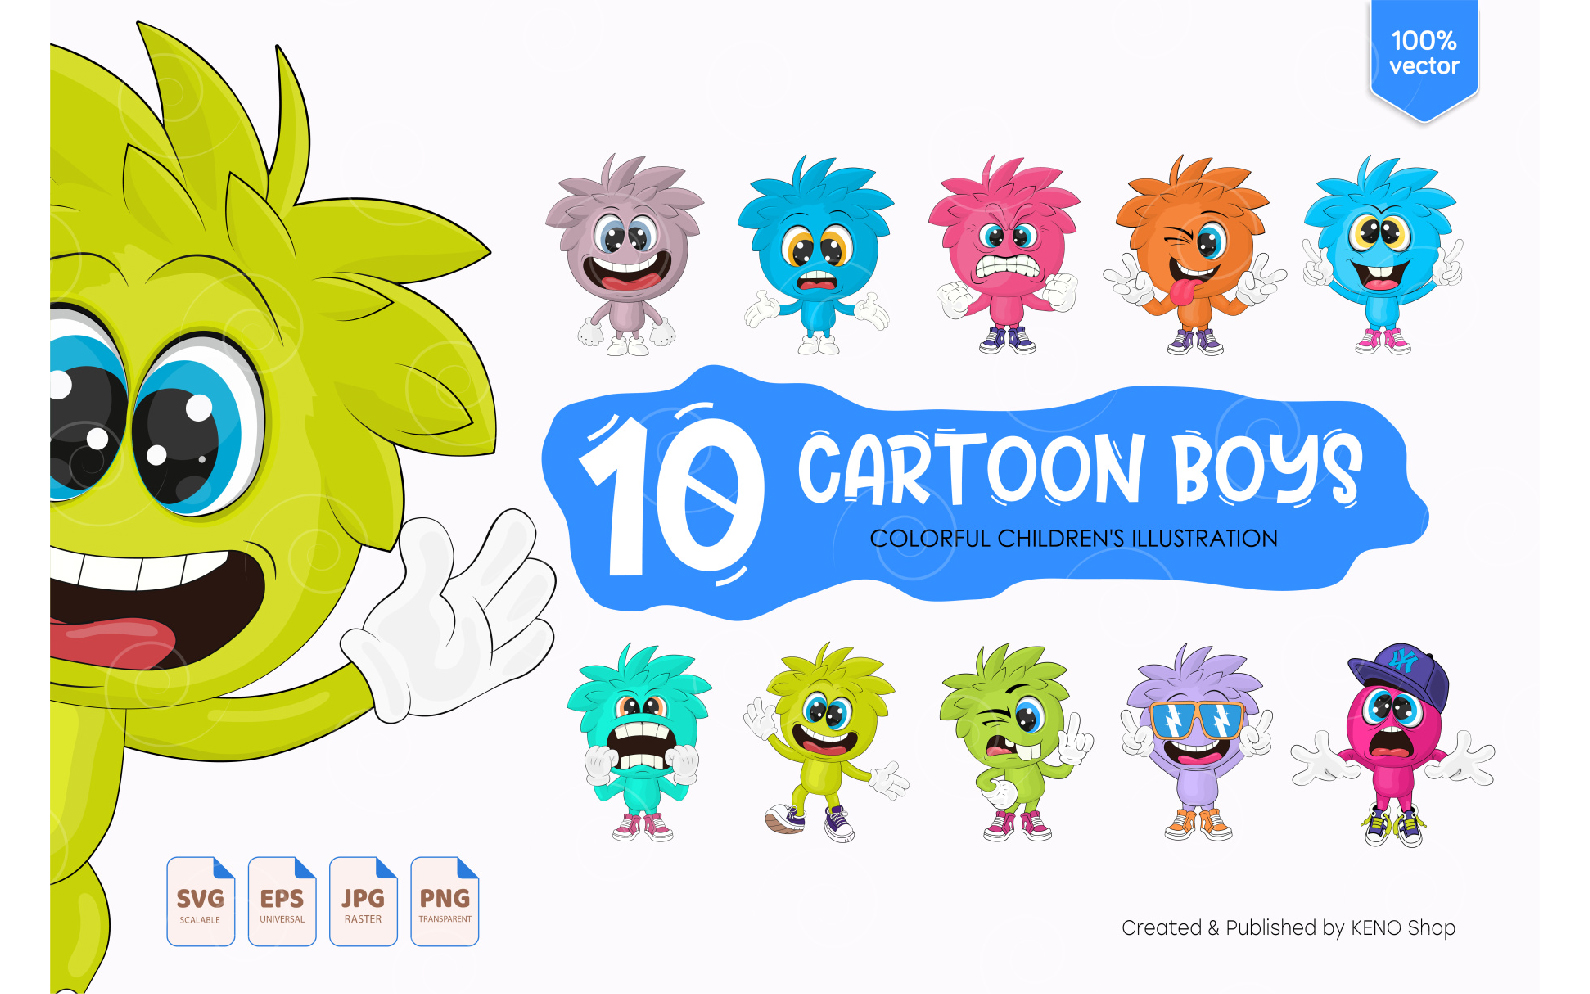 10 Cartoon Boys - Vector Image